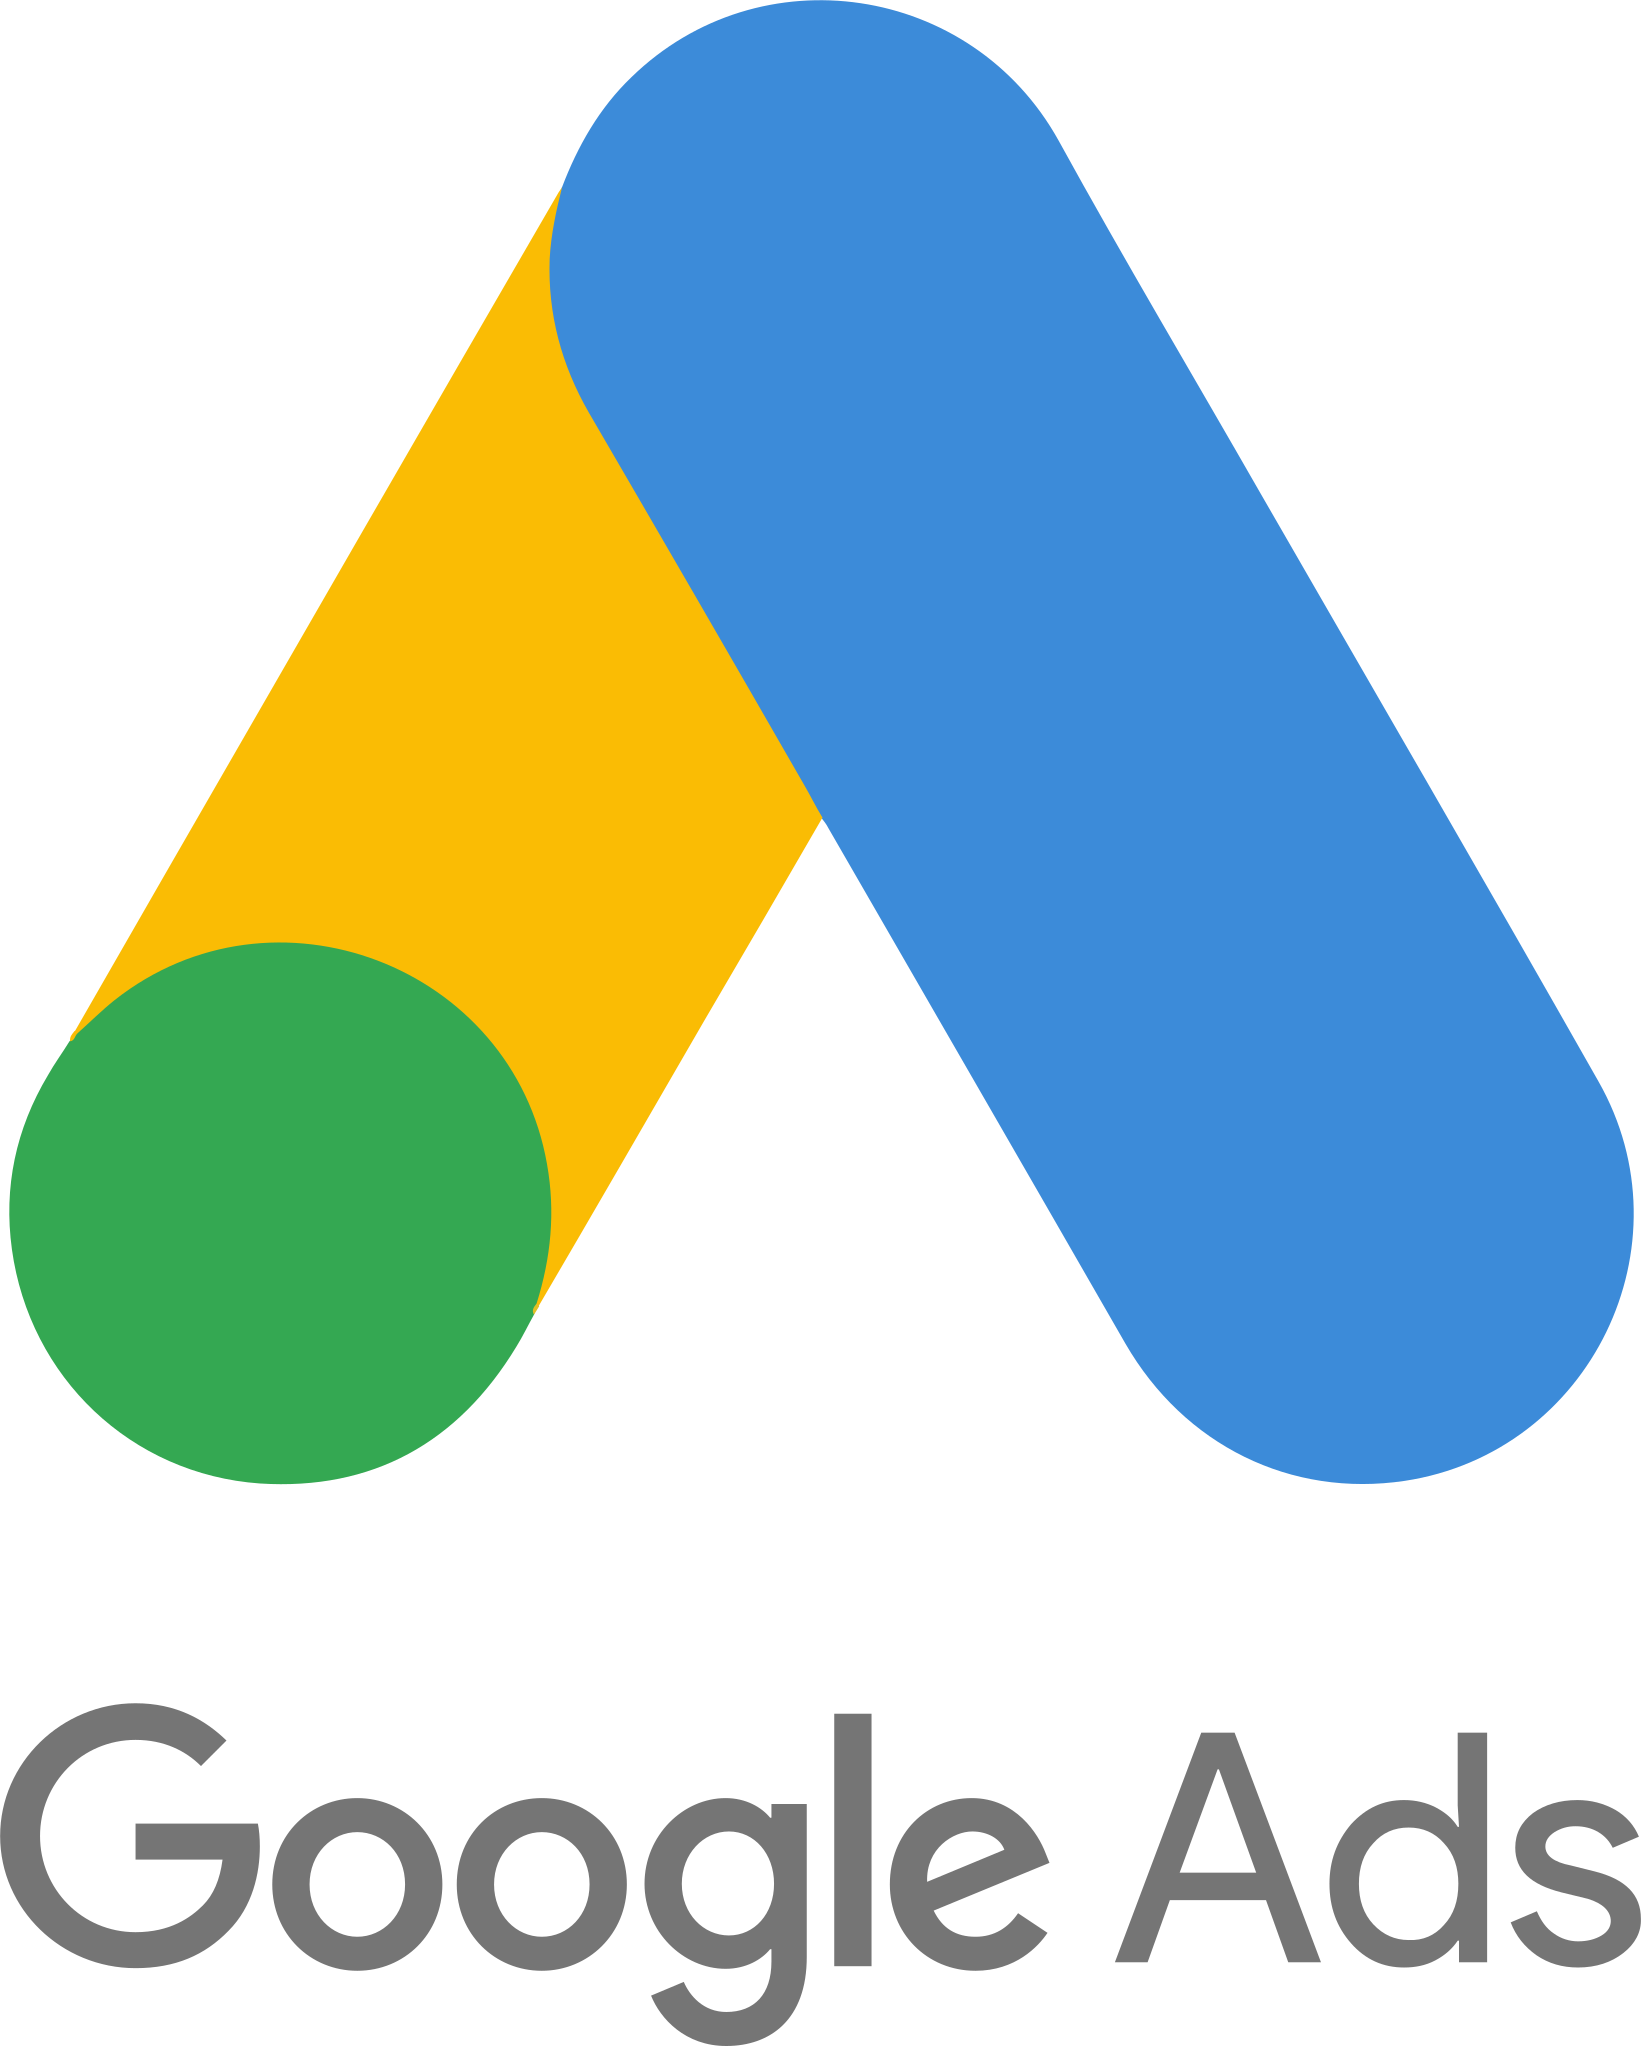 Google ads logo transparent background